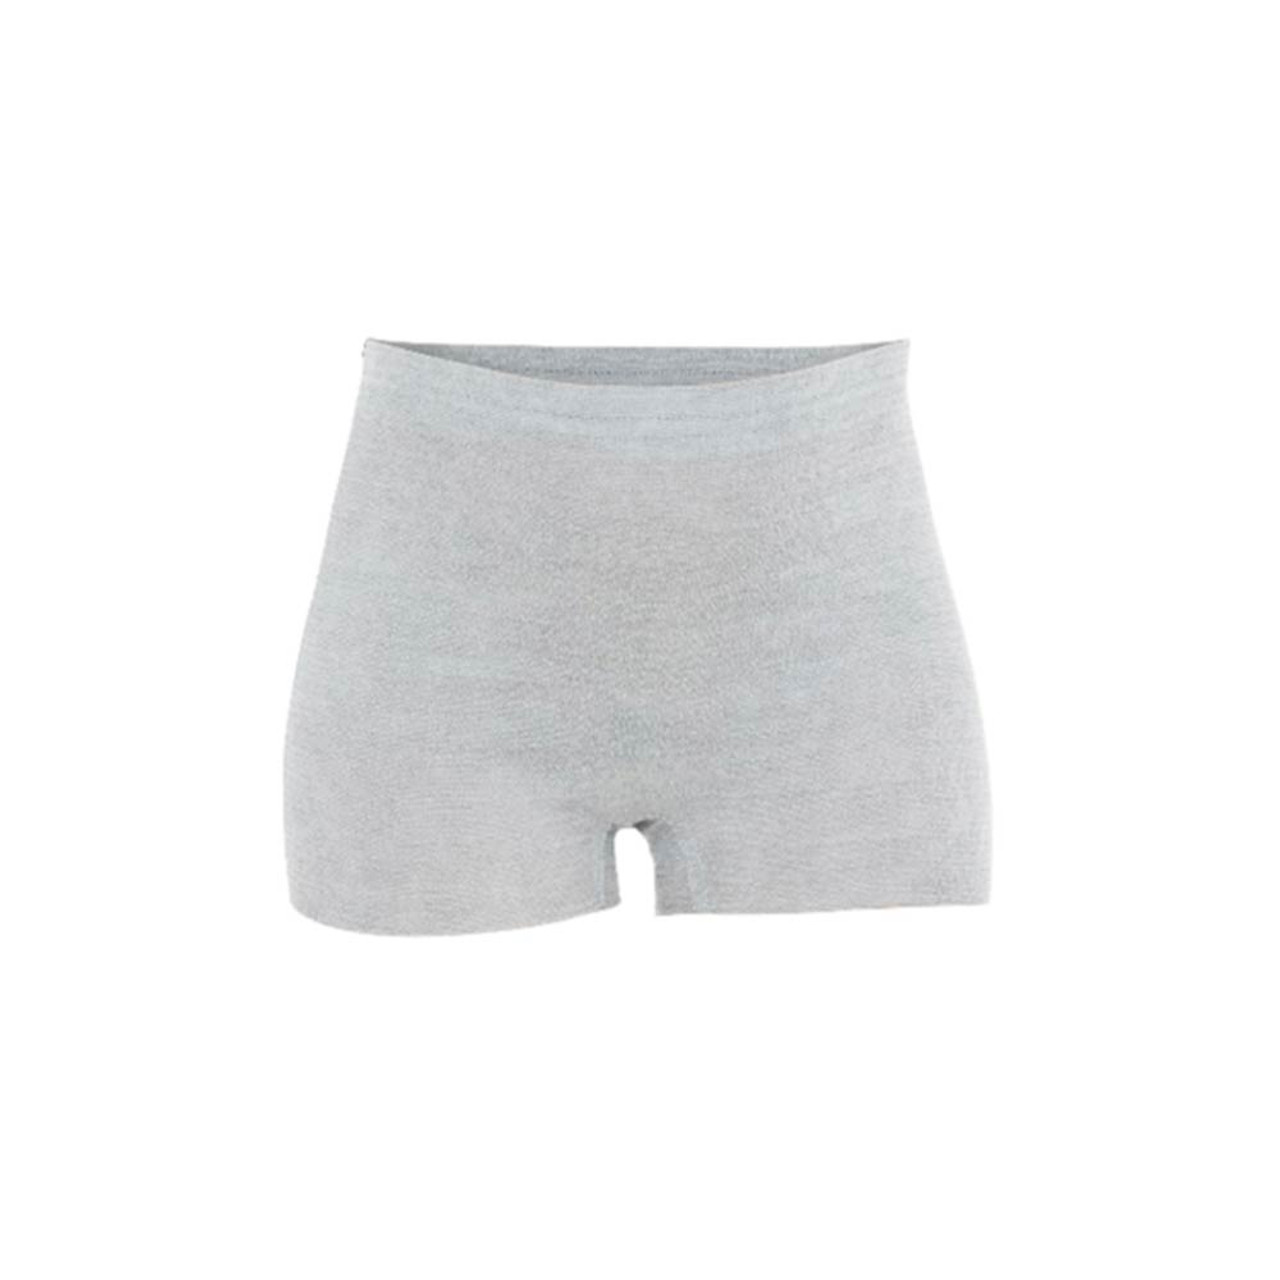 FridaMom Disposable Underwear Boyshort Petite